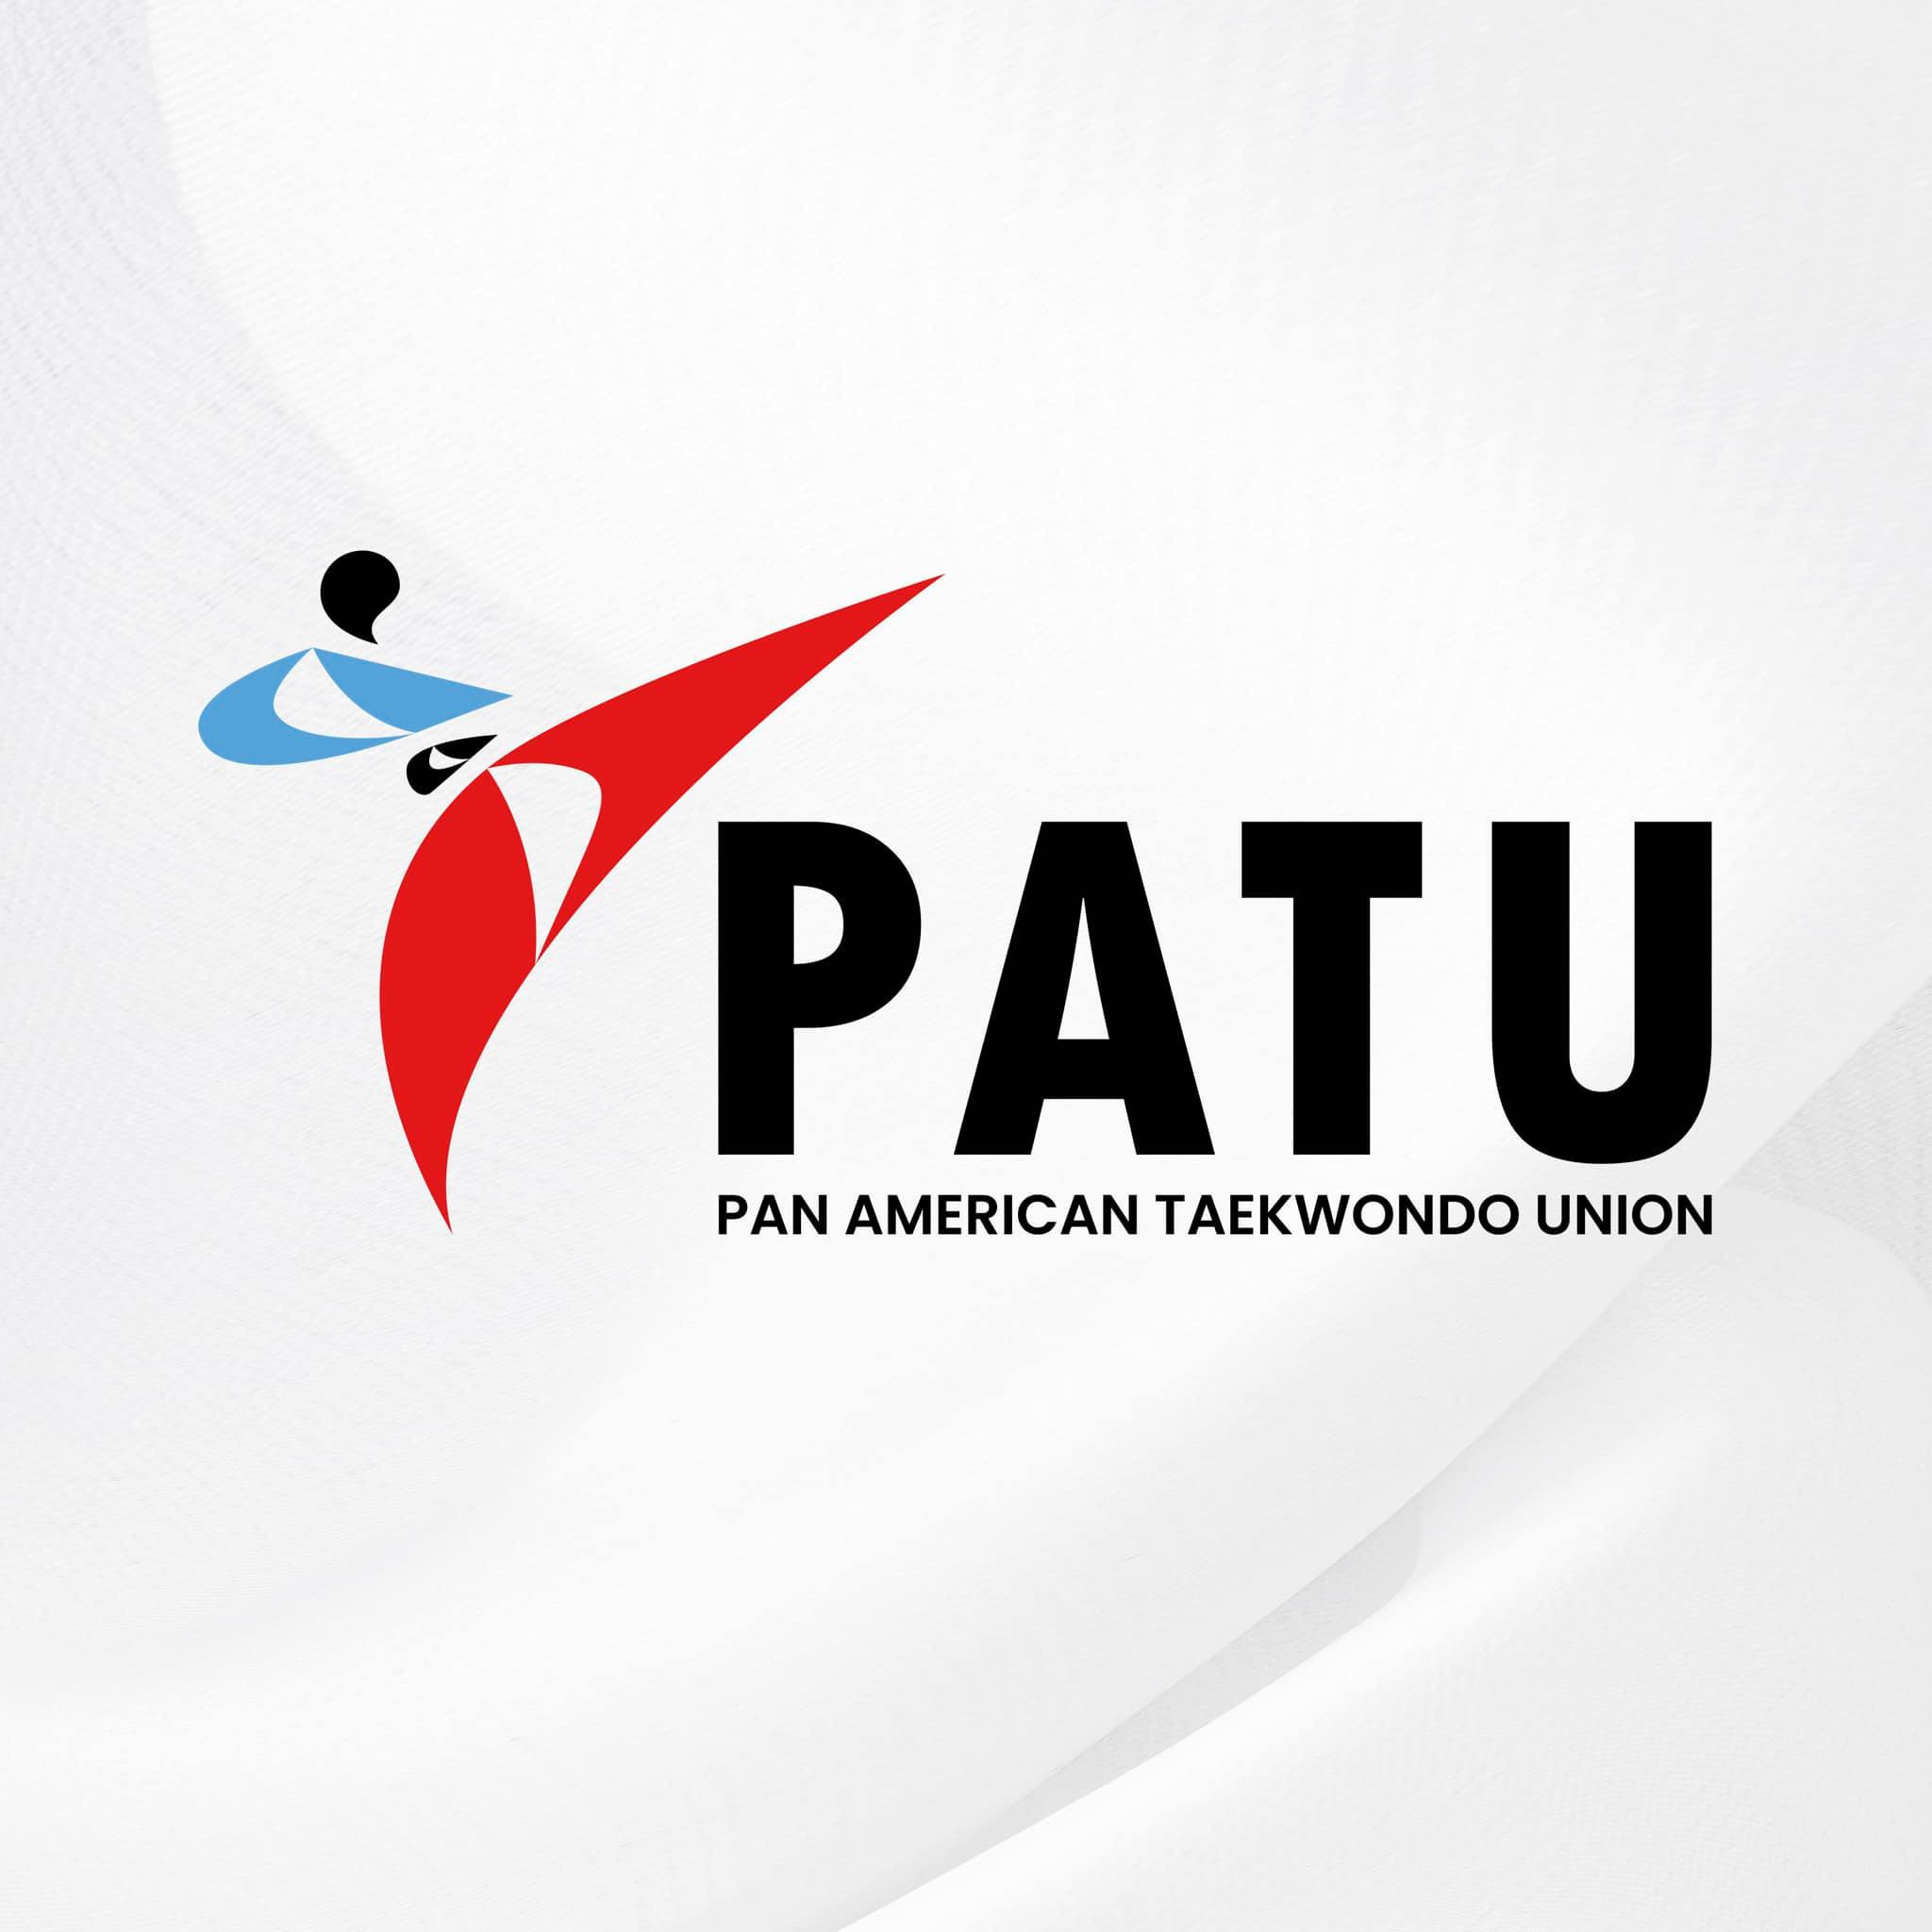 Pan American Taekwondo Union establishes Education Committee